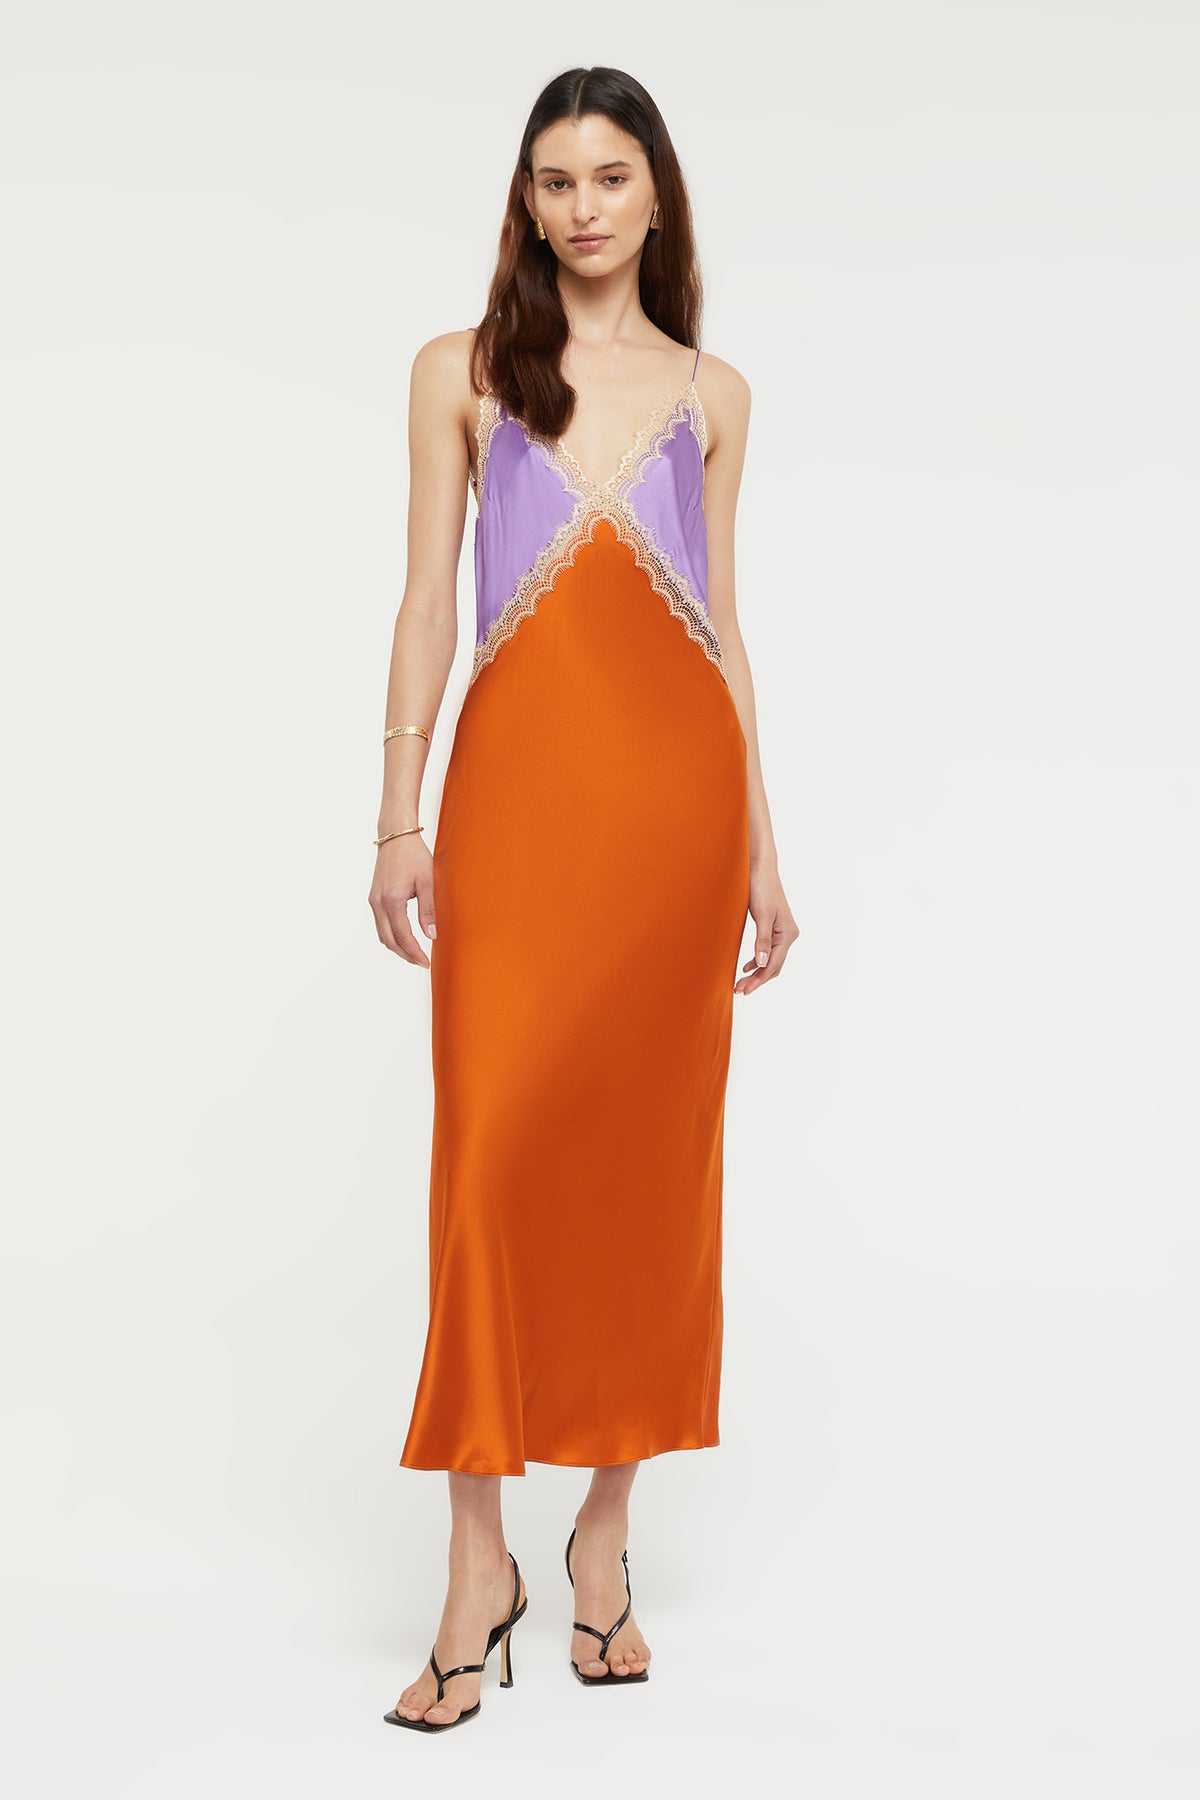 Sadie Dress in Amethyst/Sunset - 100% Silk | Ginia RTW